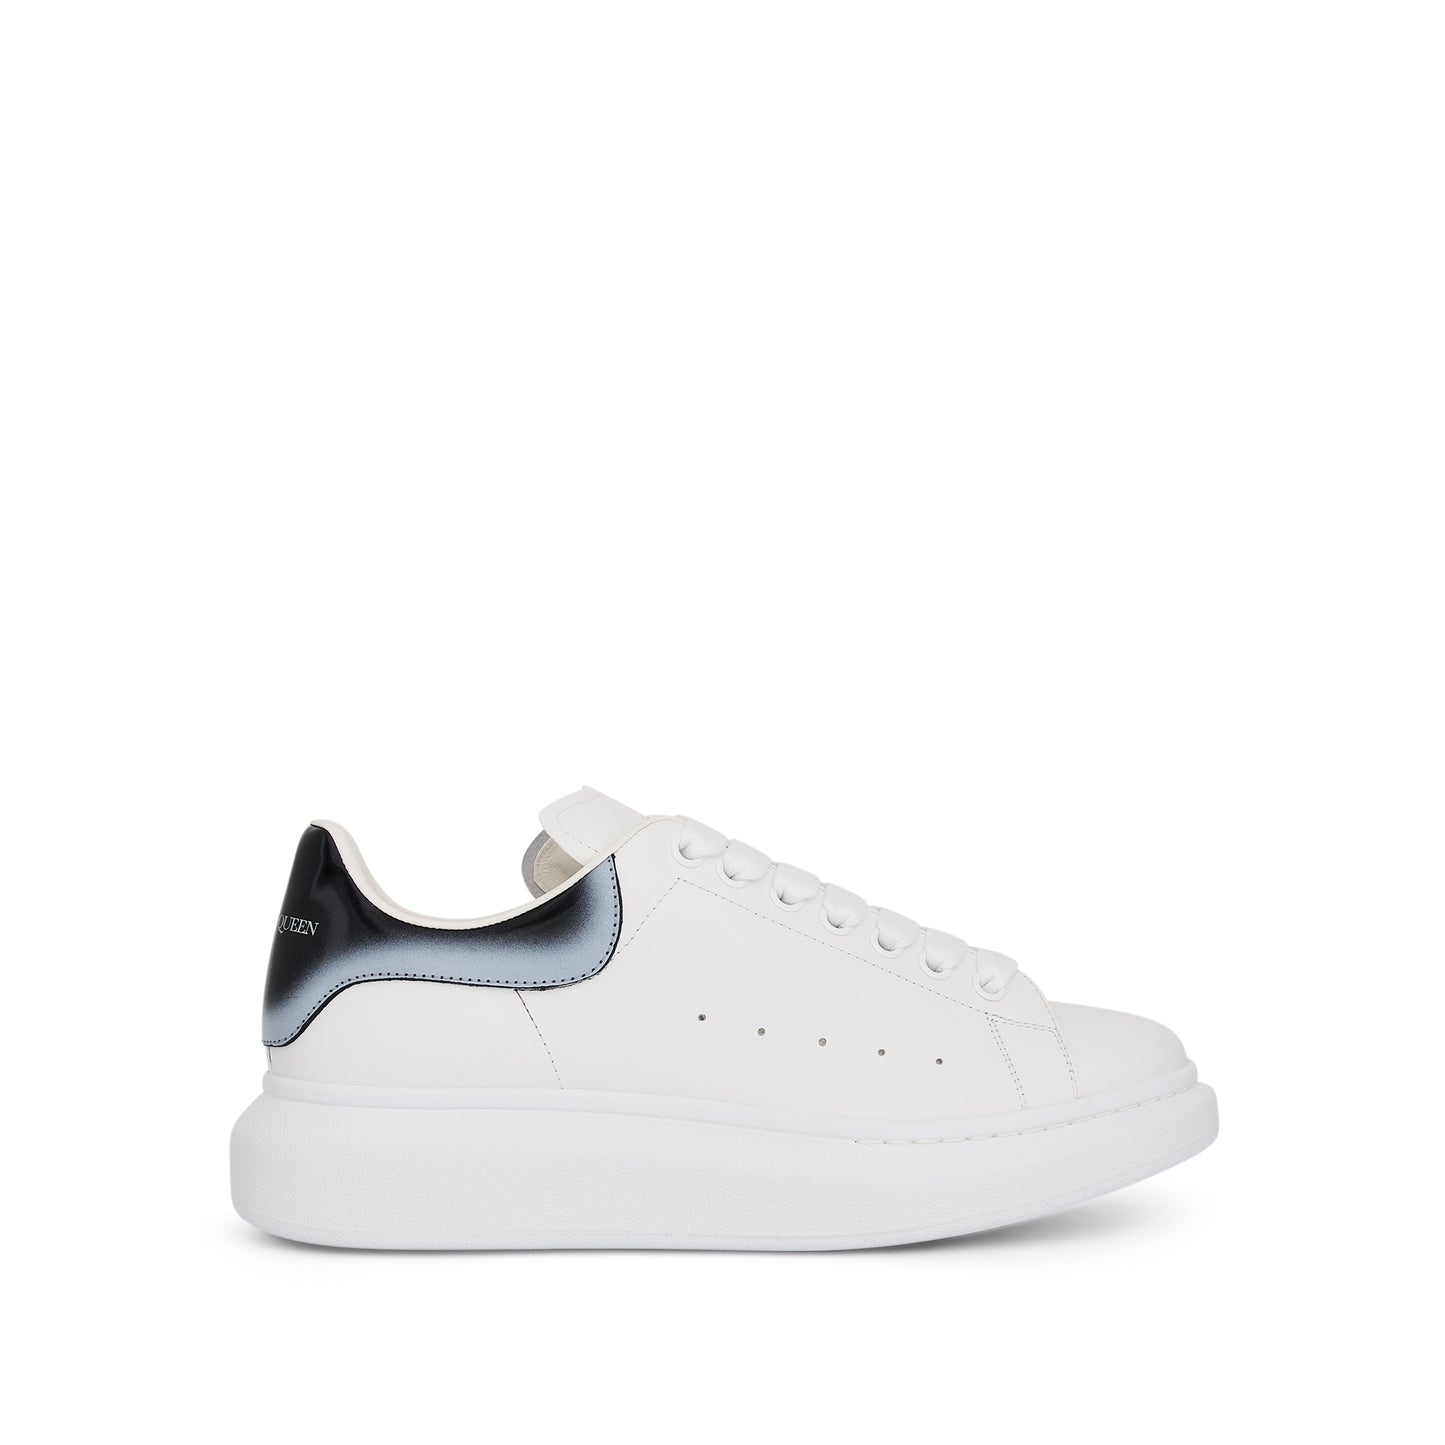 Larry Layered Heel Sneaker in White/Black/Silver